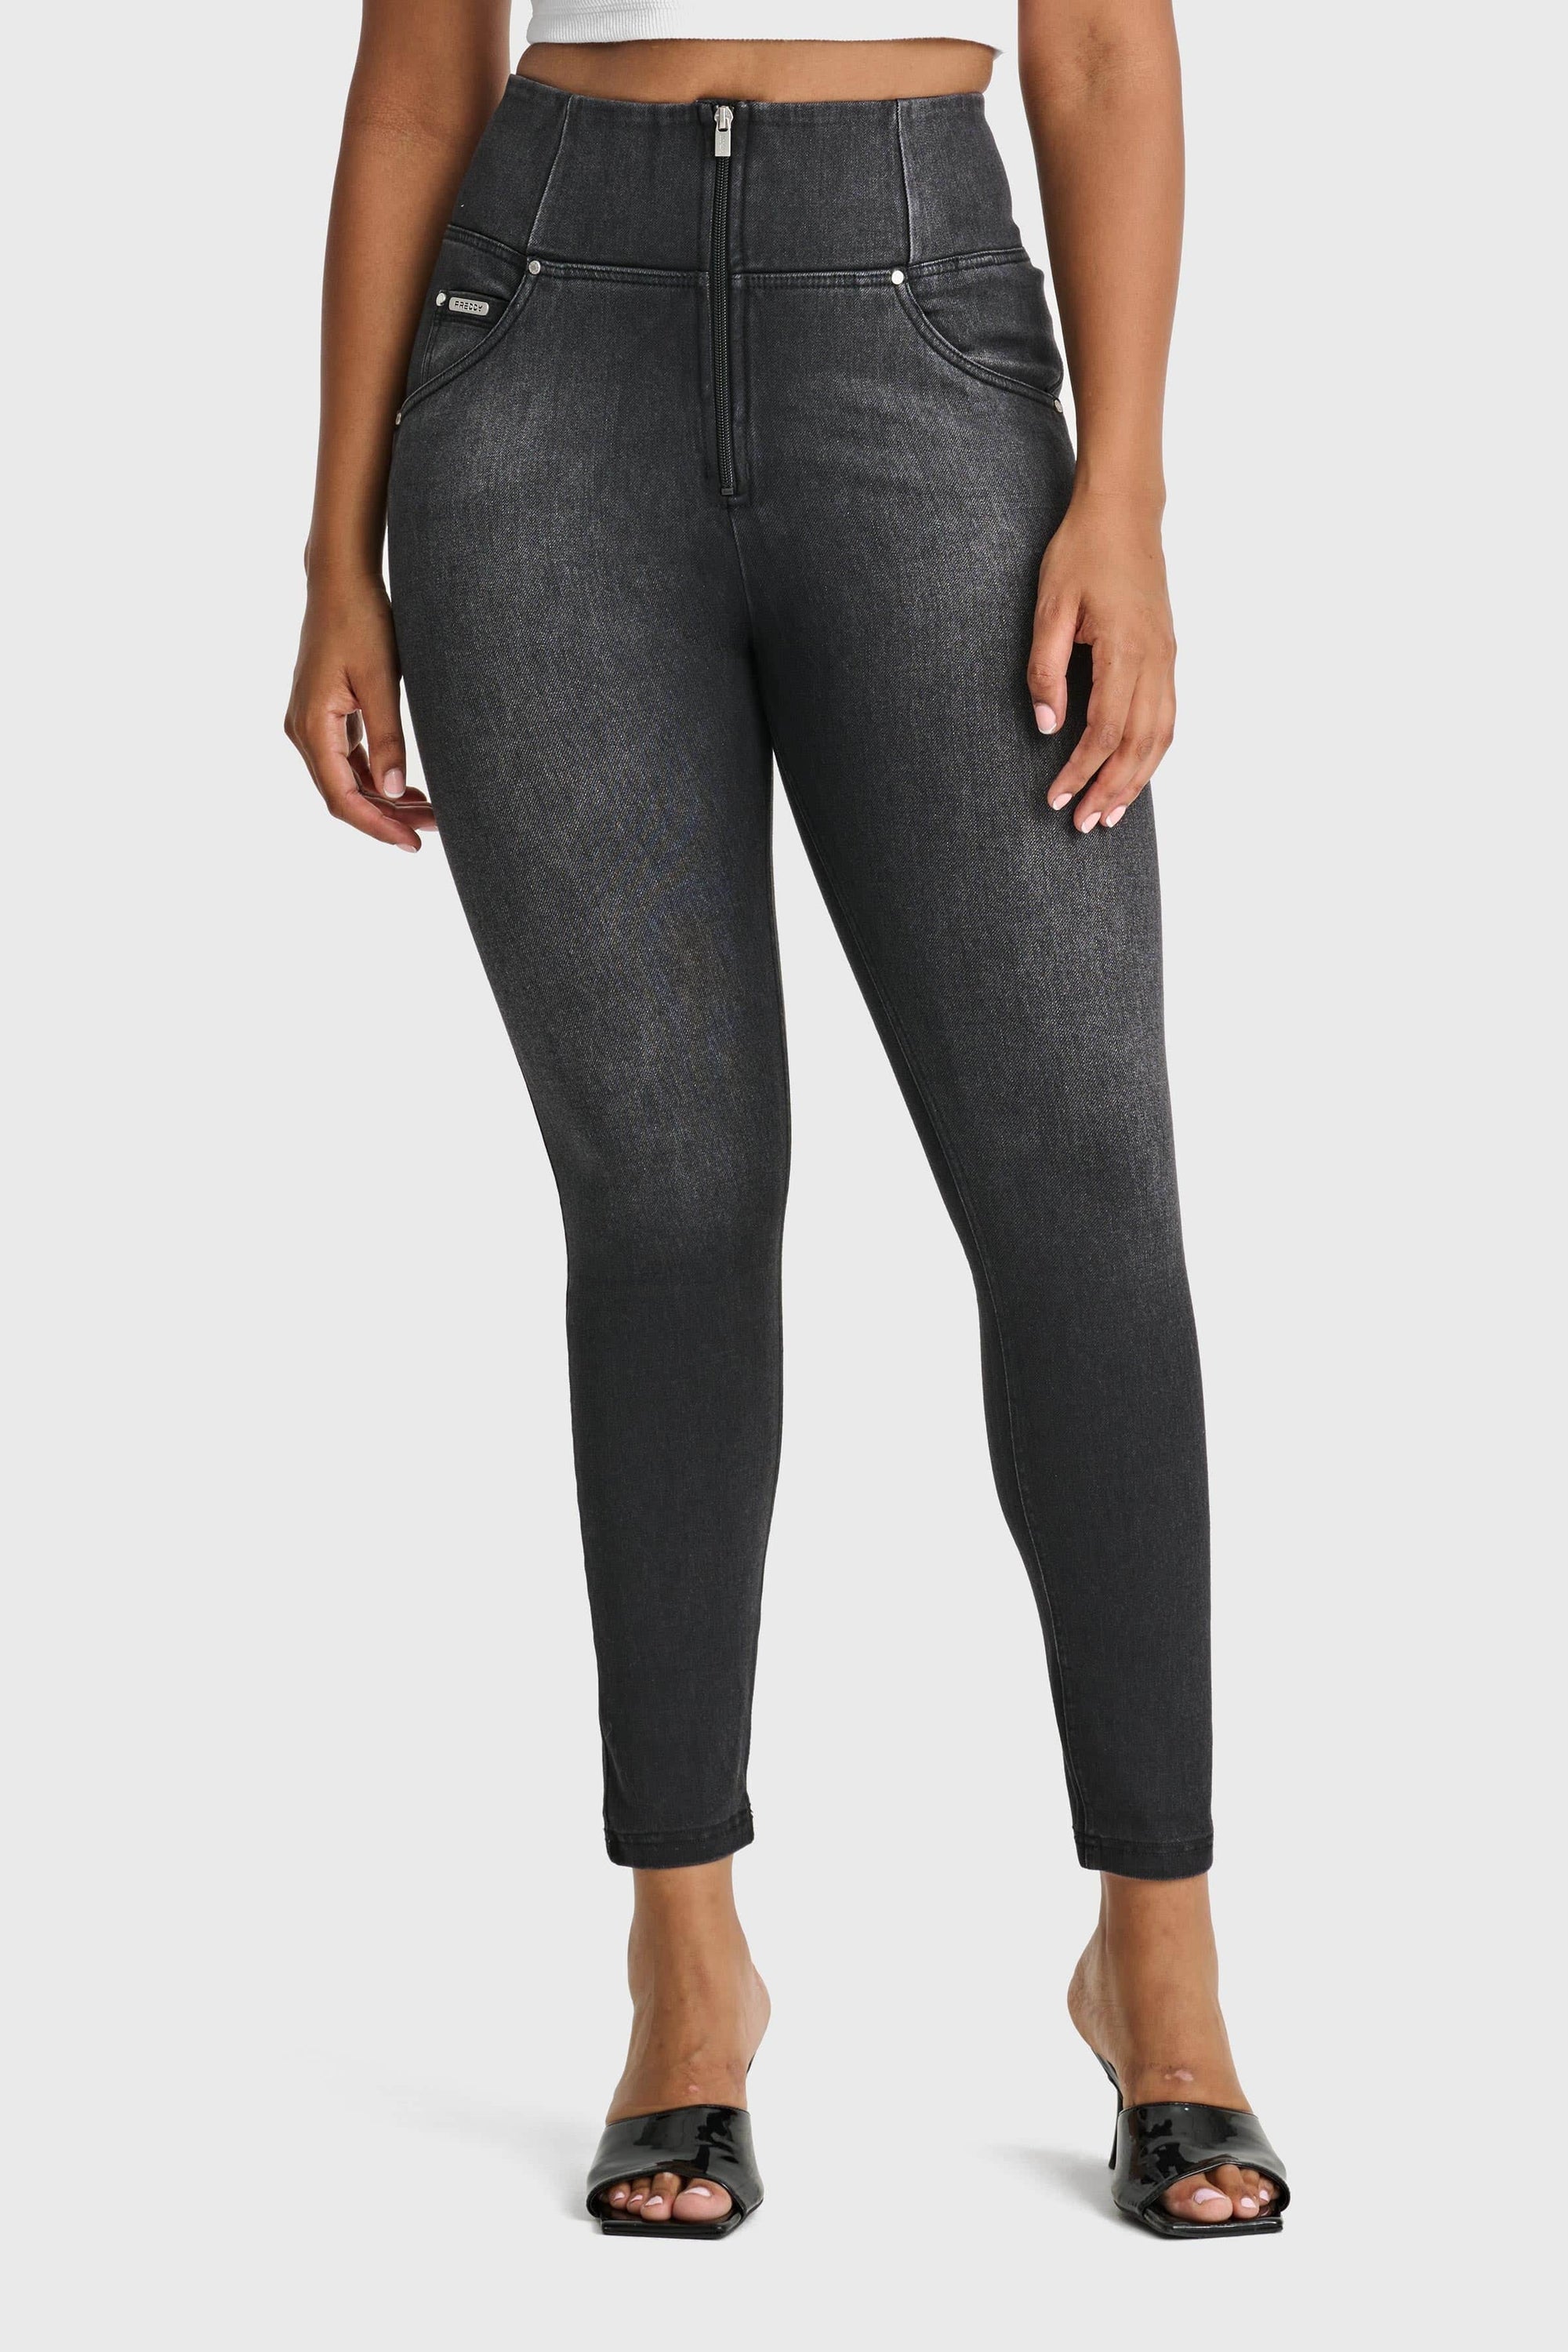 WR.UP® Snug Curvy Jeans - High Waisted - Full Length - Black + Black Stitching 1